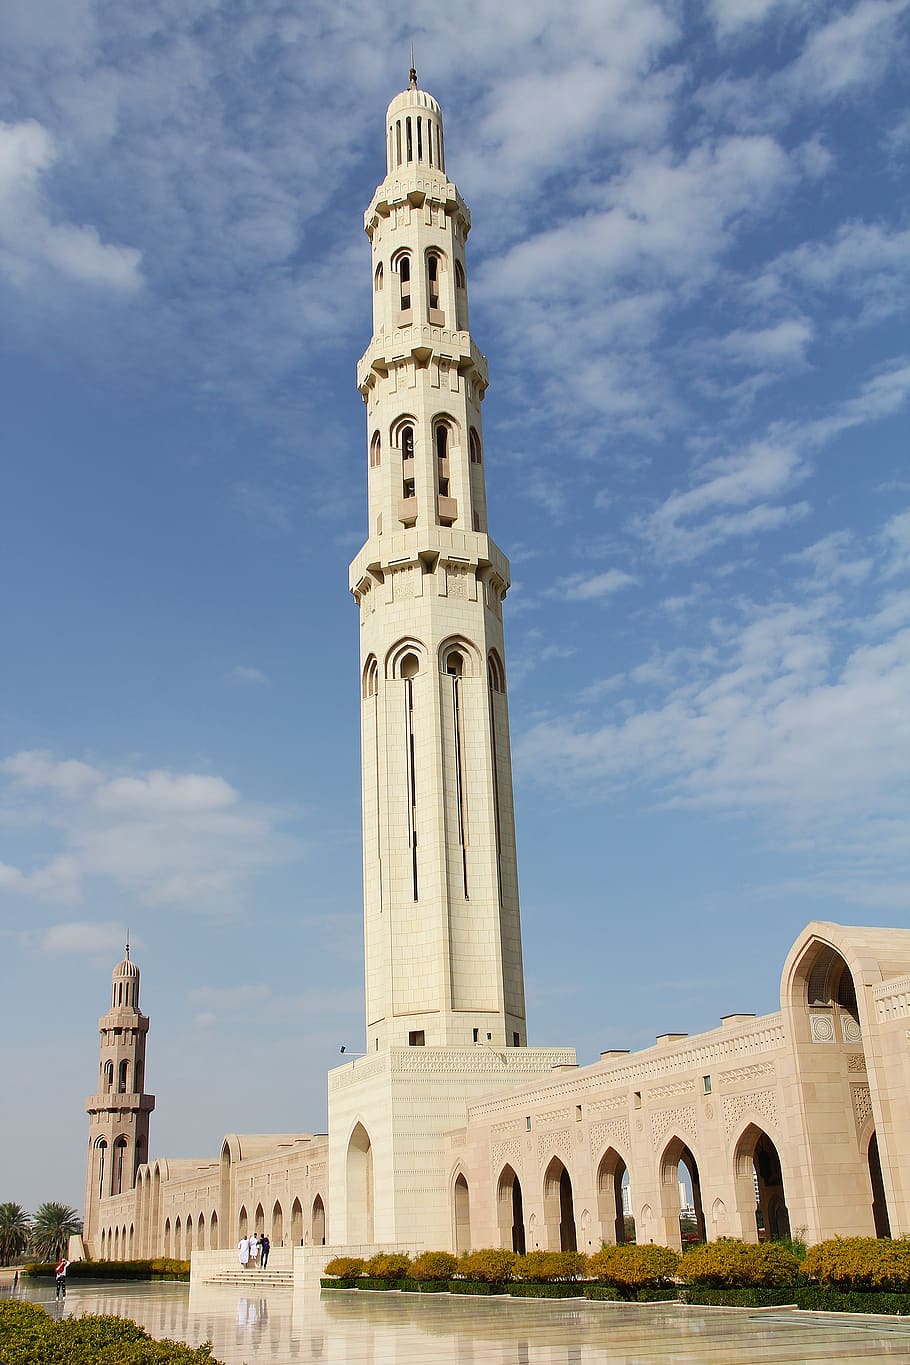 sultan qaboos grand mosque, amazing, beautiful, hugh, stunning